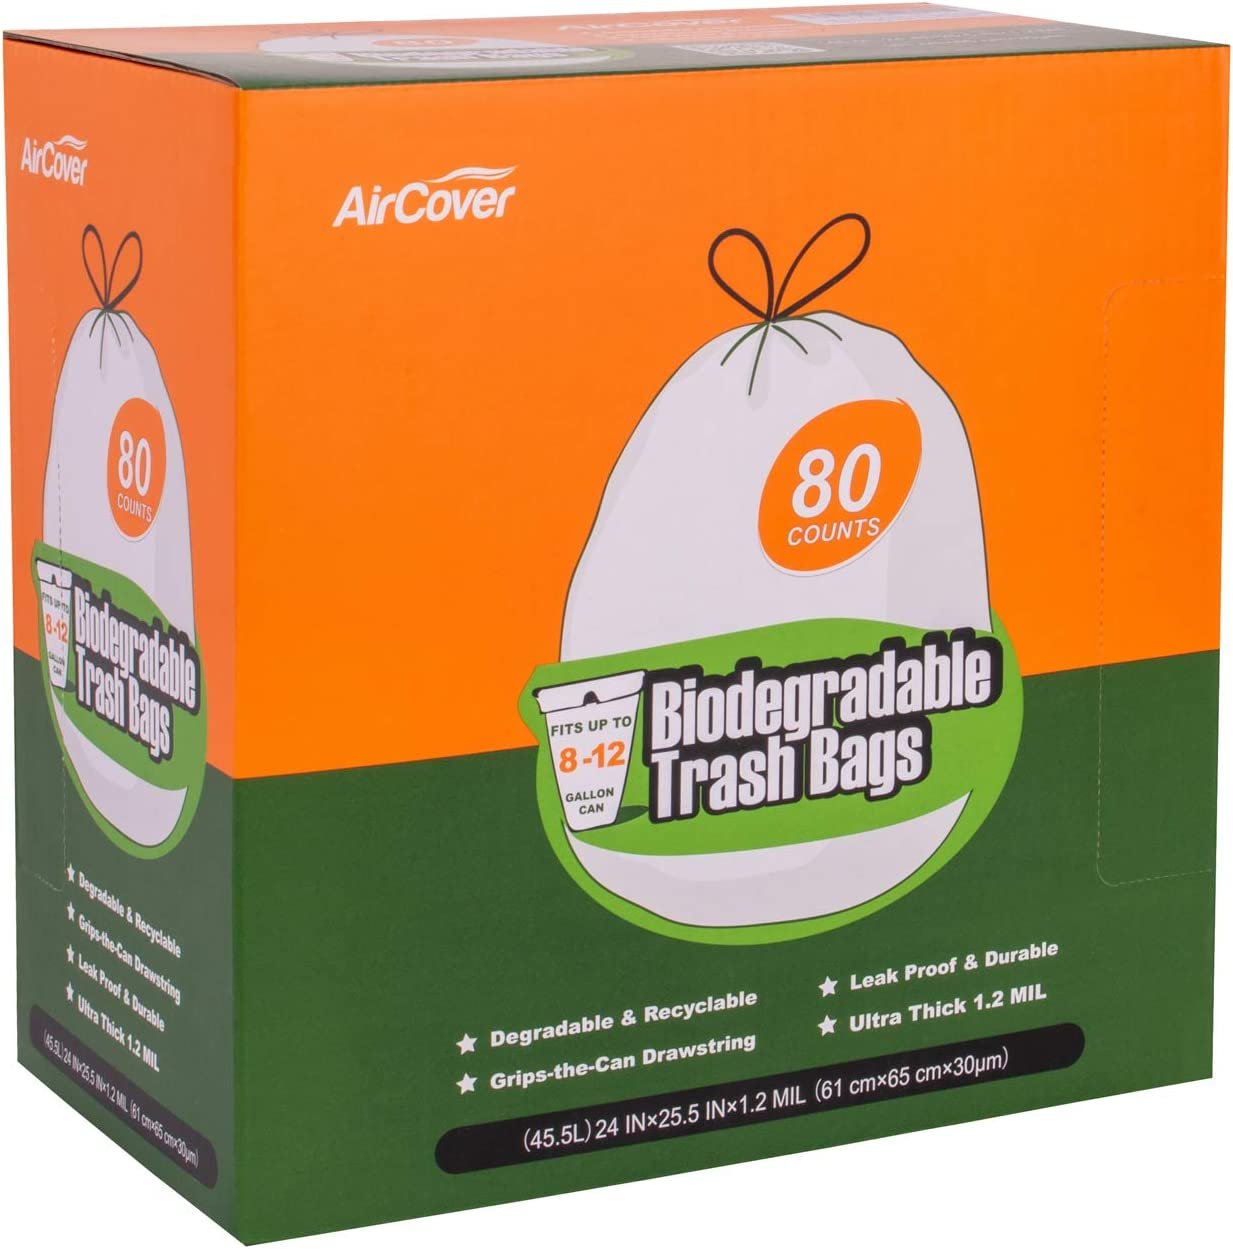 Biodegradable Trash Bags Aircover 8-12